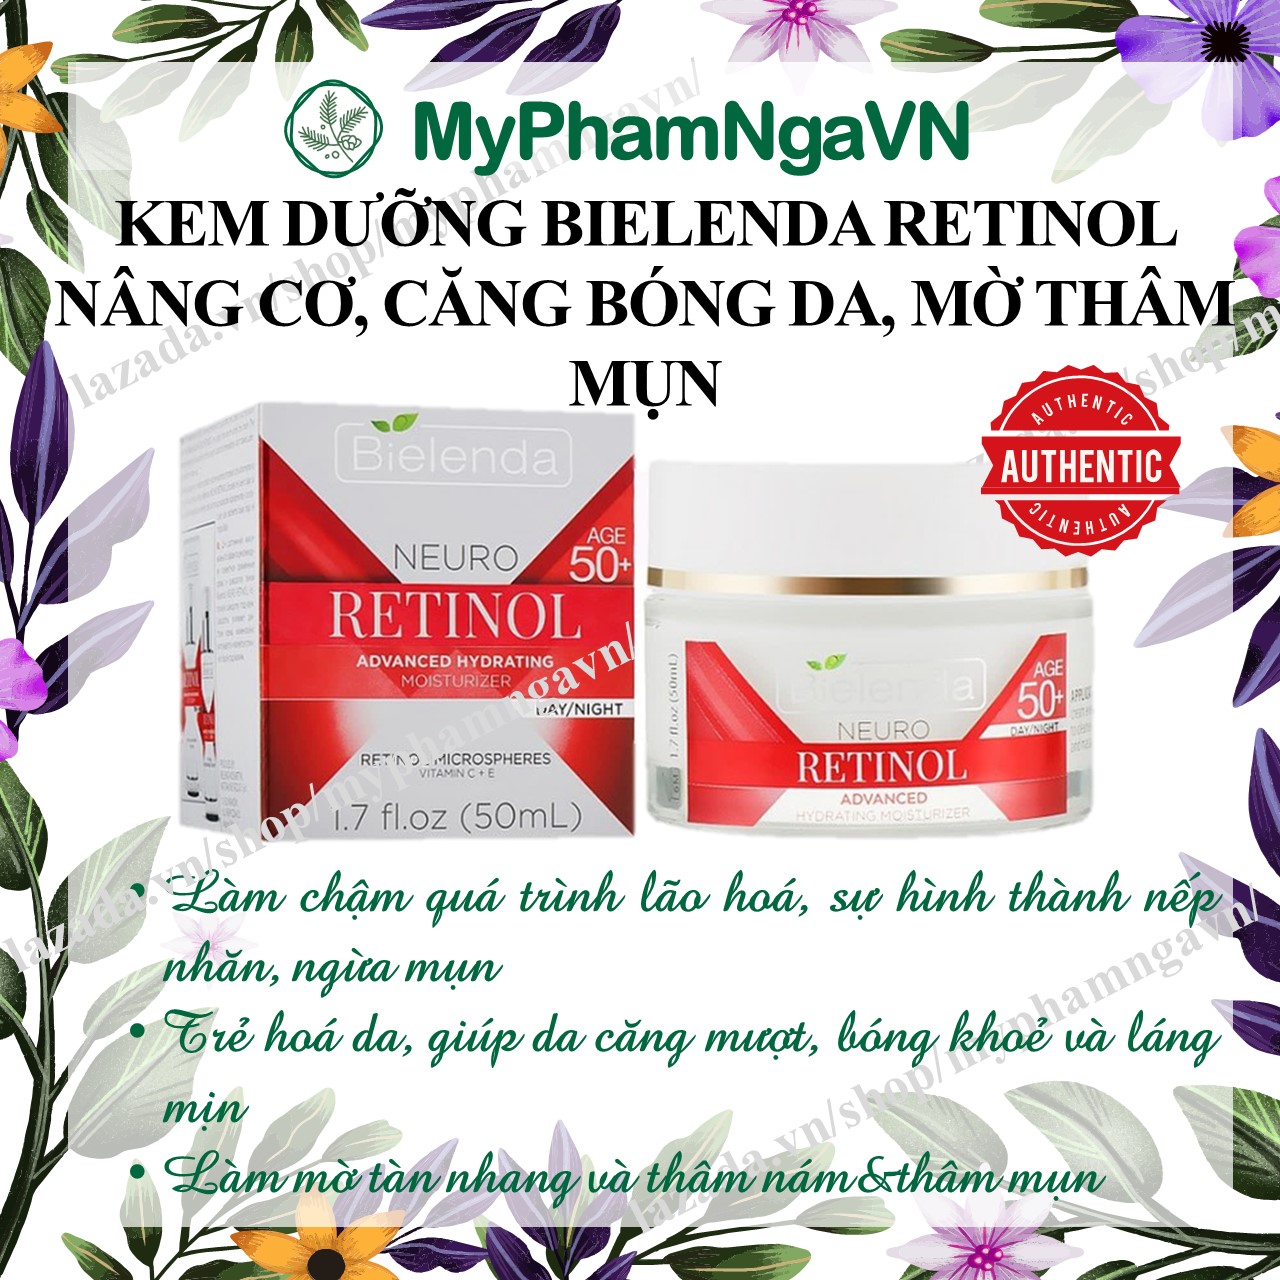 [HCM]Kem dưỡng Bielenda Neuro Retinol Lifting Anti-wrinkle Face Cream Concentrate 50+ căng bóng mịn da